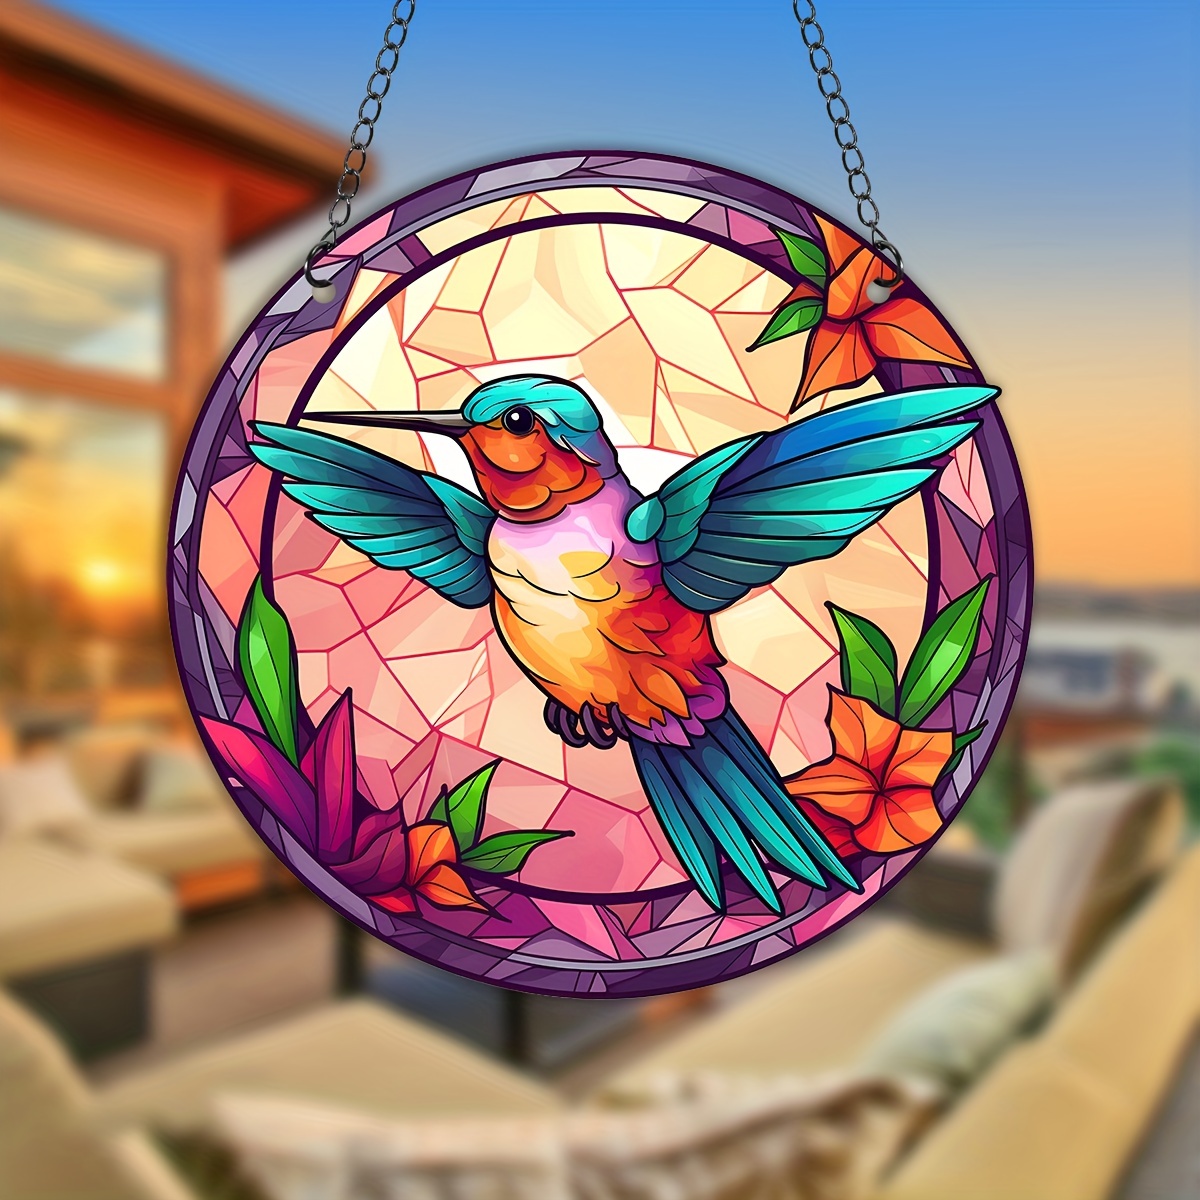 Hummingbird Suncatcher For Window, Hummingbird With Flower Stained Glass Suncatcher  Bird Stained Glass Window Hangings Ornaments